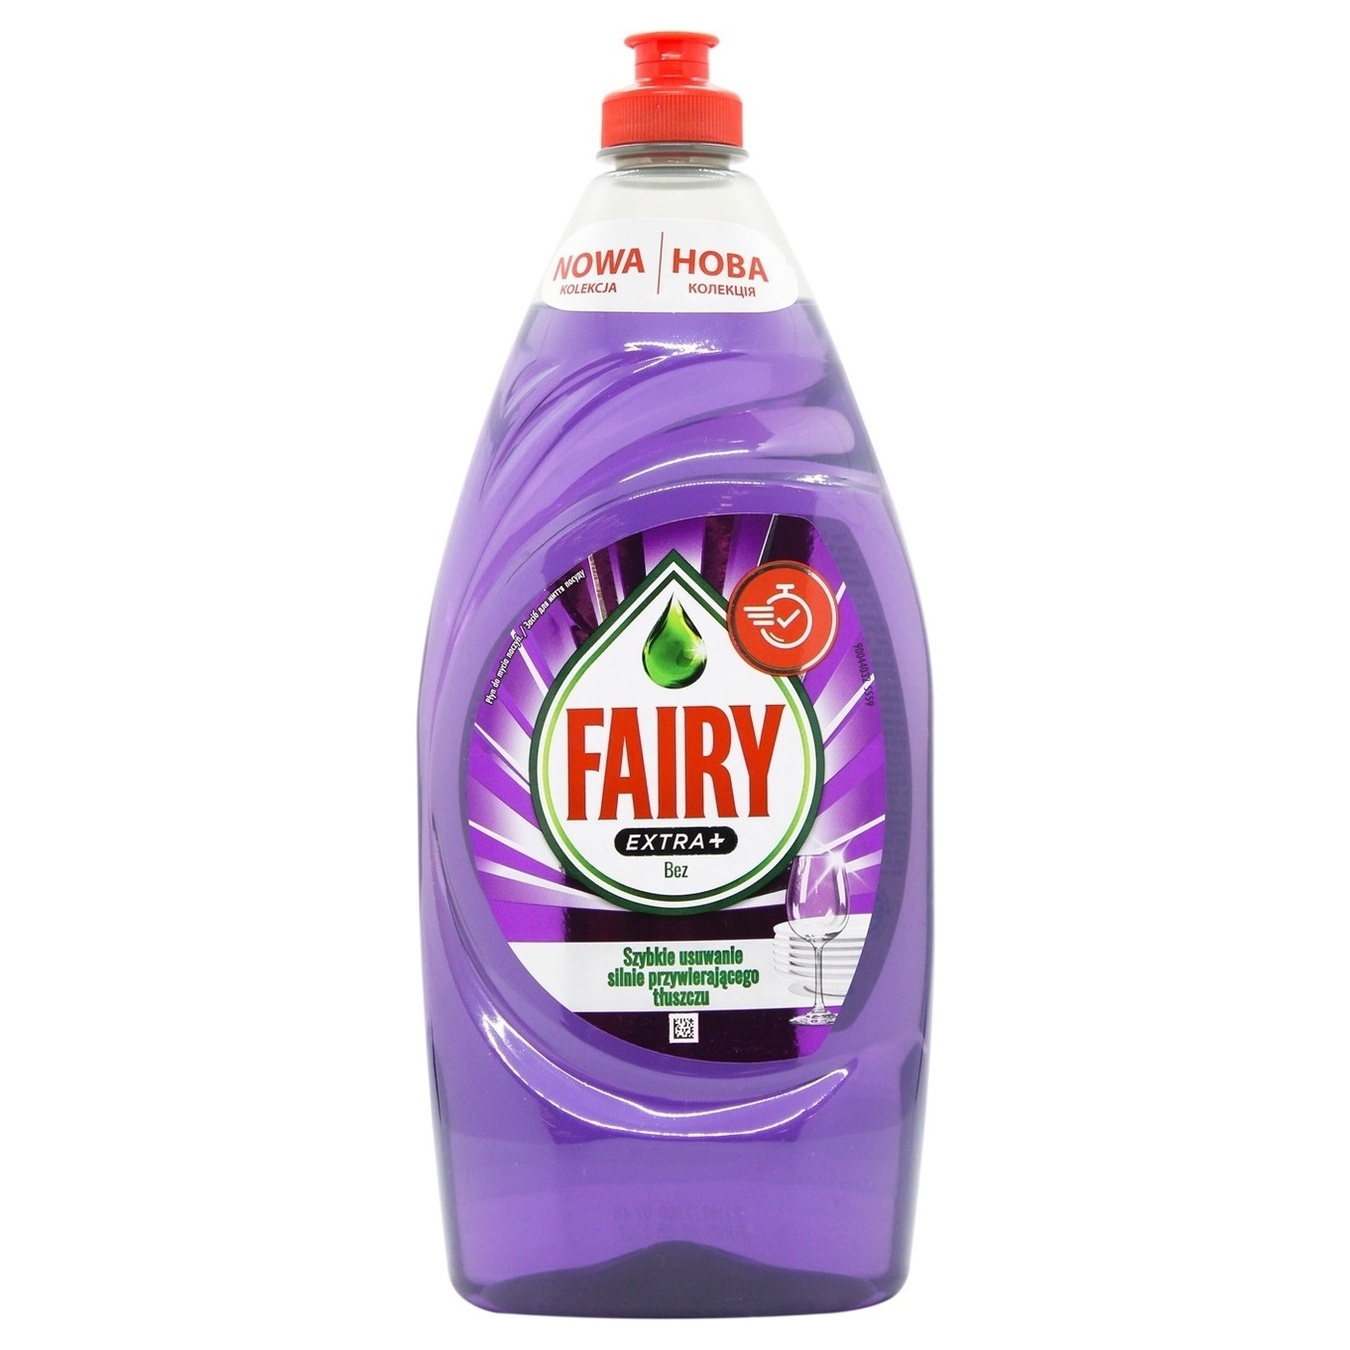 Dishwashing detergent Fairy Extra+ lilac 905 ml